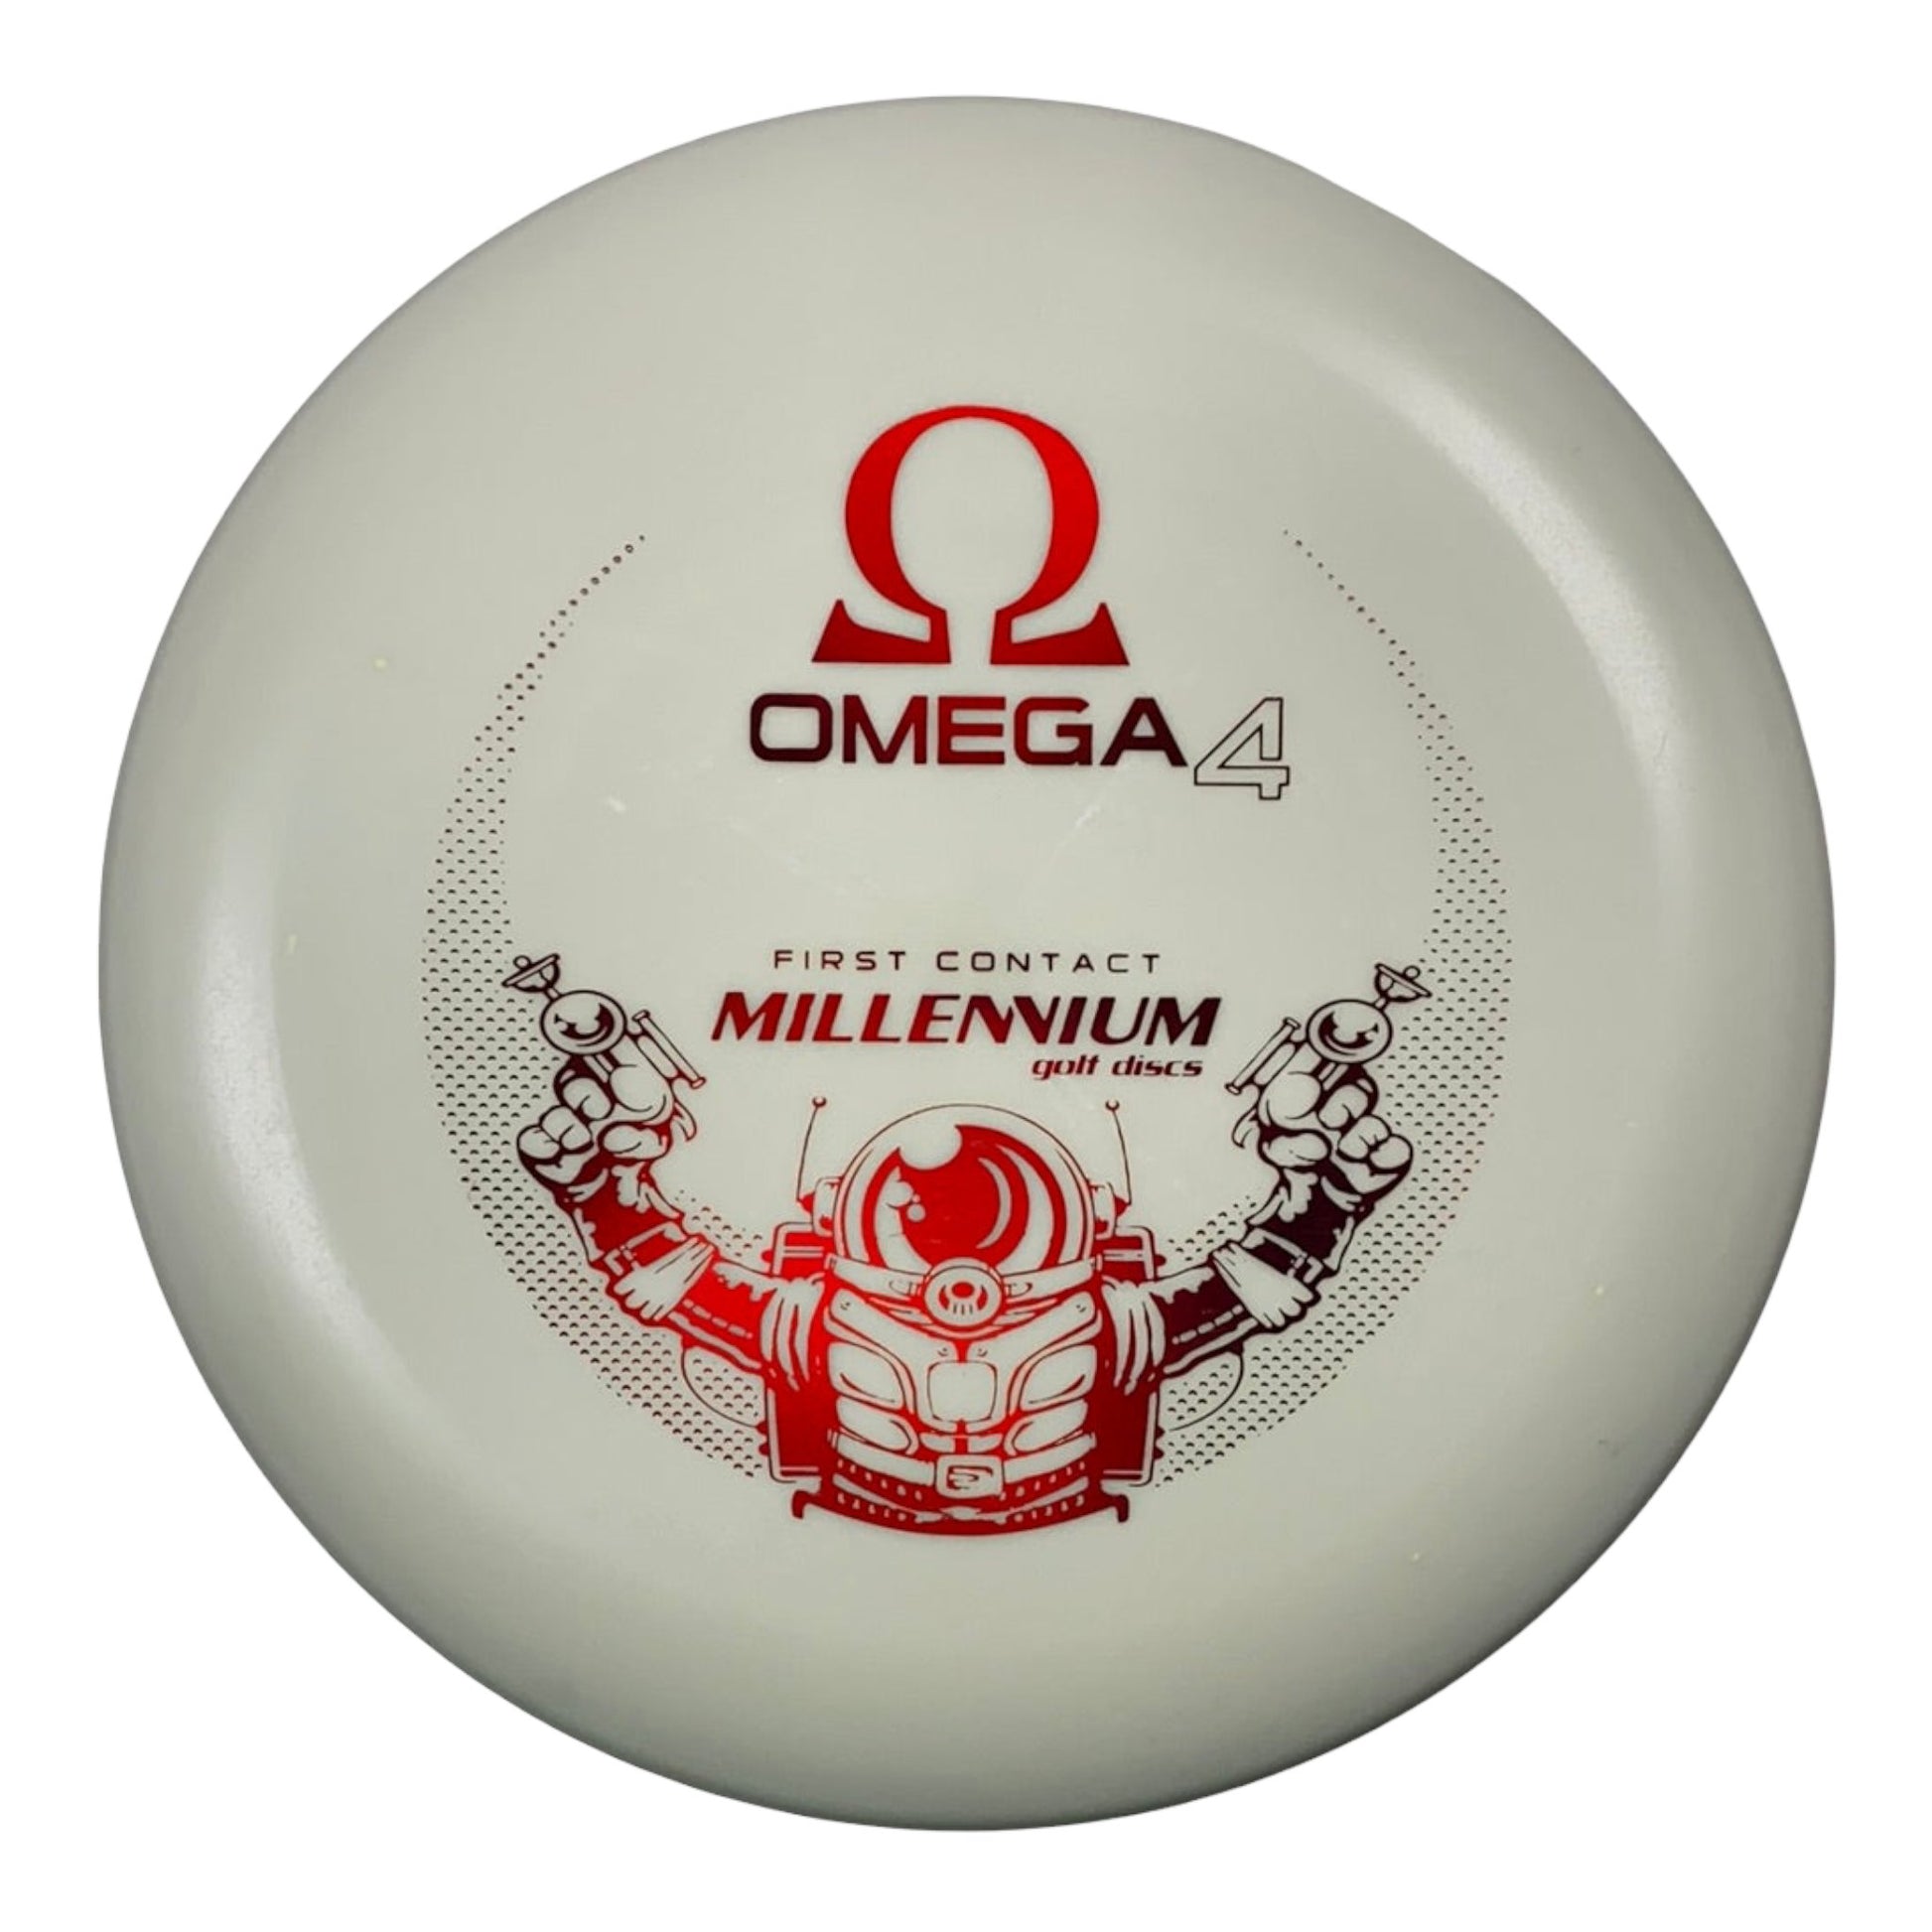 Millennium Golf Discs Omega4 | DT Lunar | White/Red 172g Disc Golf